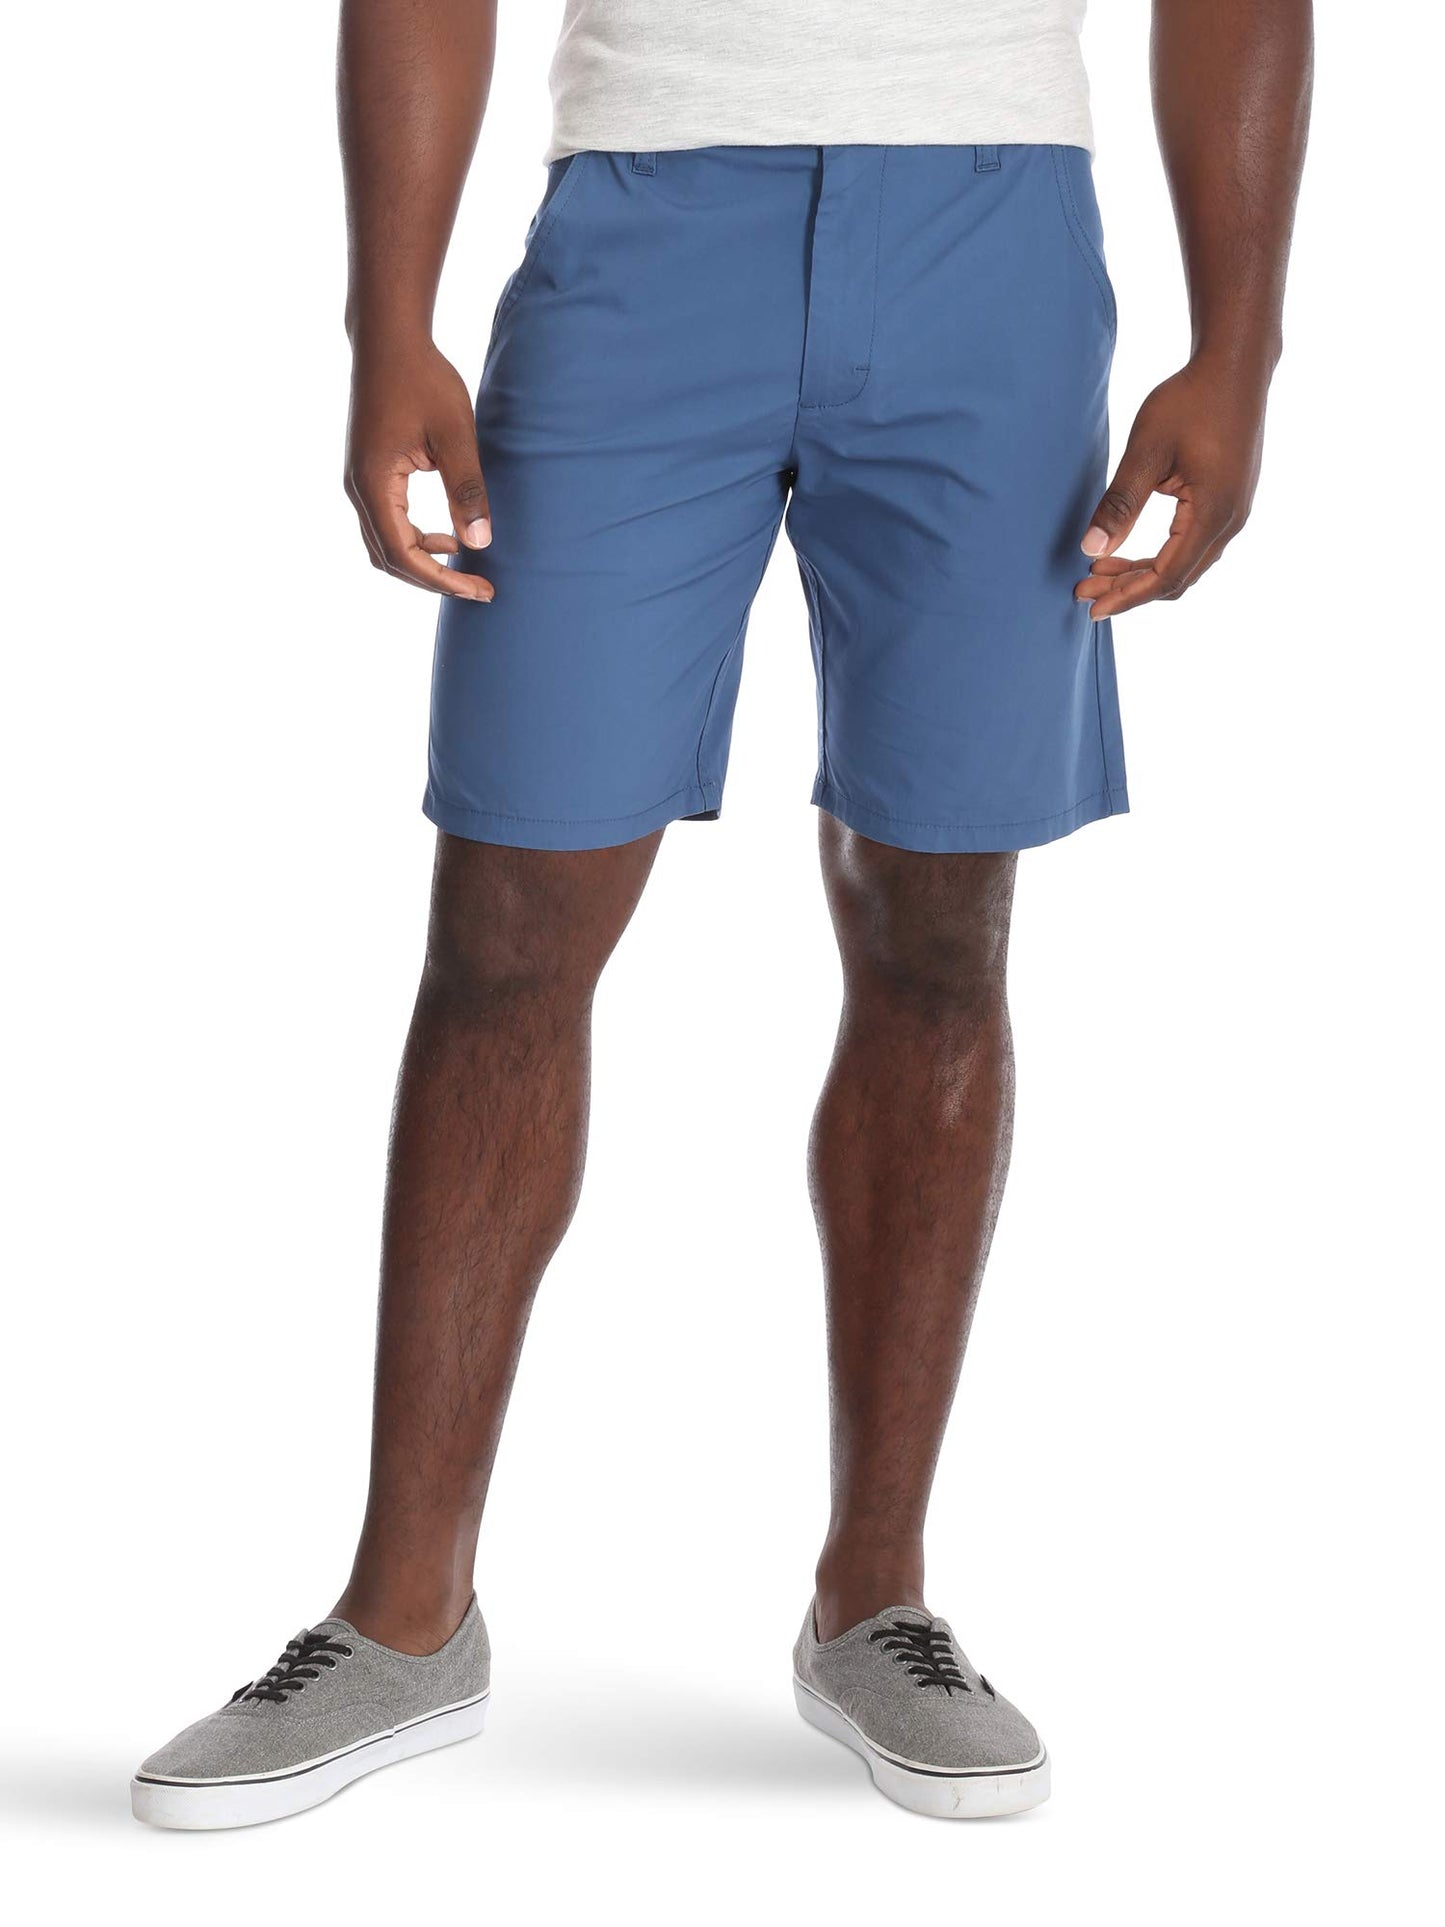 Wrangler Authentics Men's Performance Comfort Flex Flat Front Short, Galaxy Blue, 32